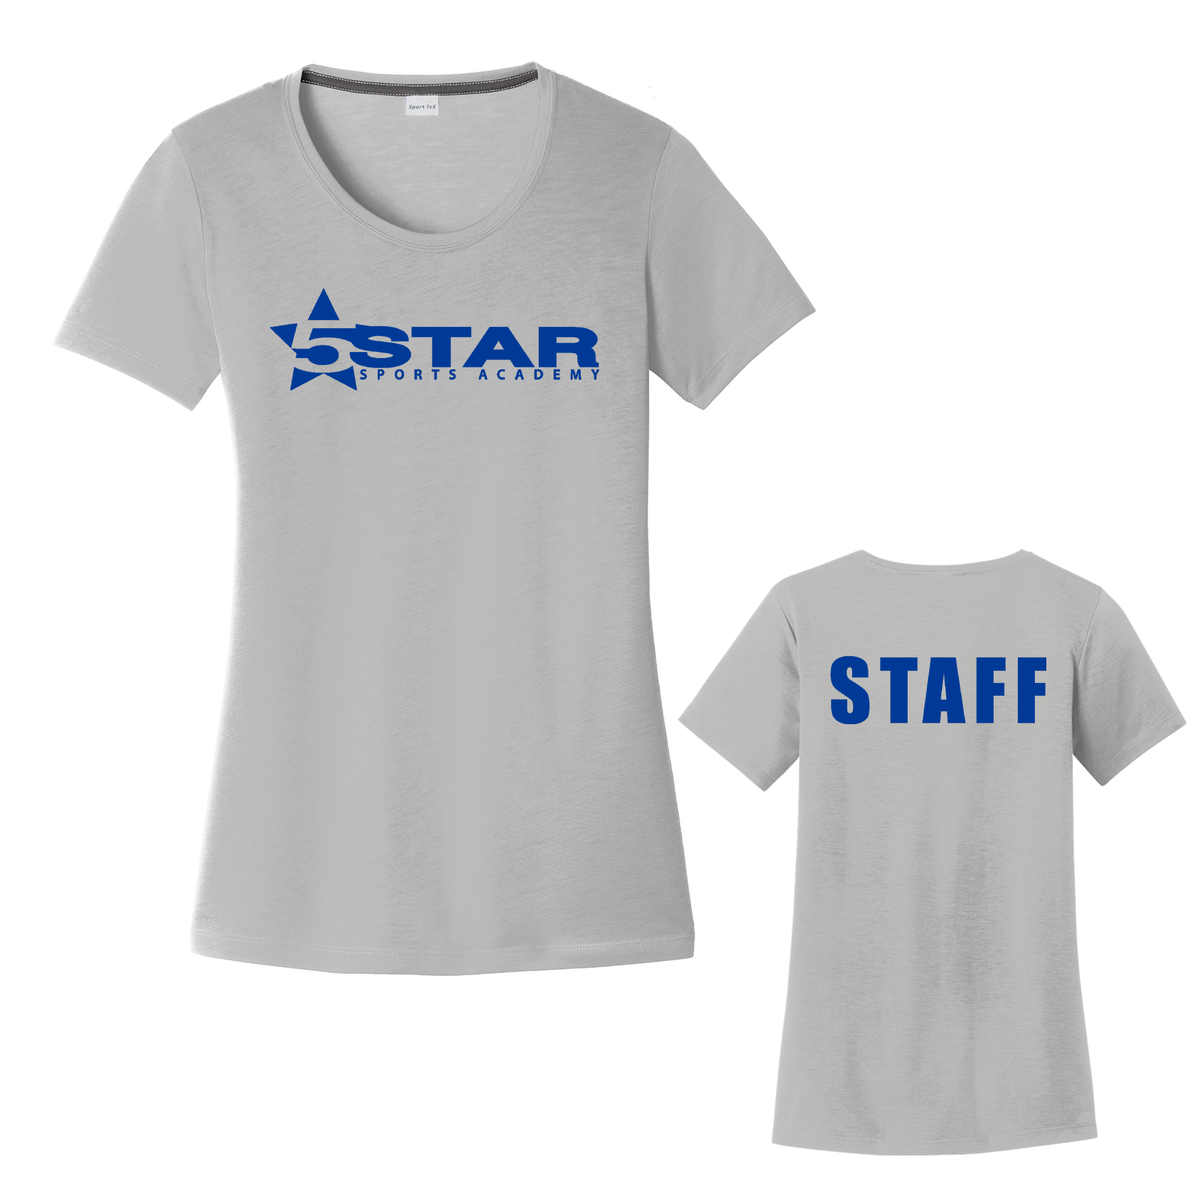 5 Star Gymnastics Staff Women's CottonTouch Performance T-Shirt